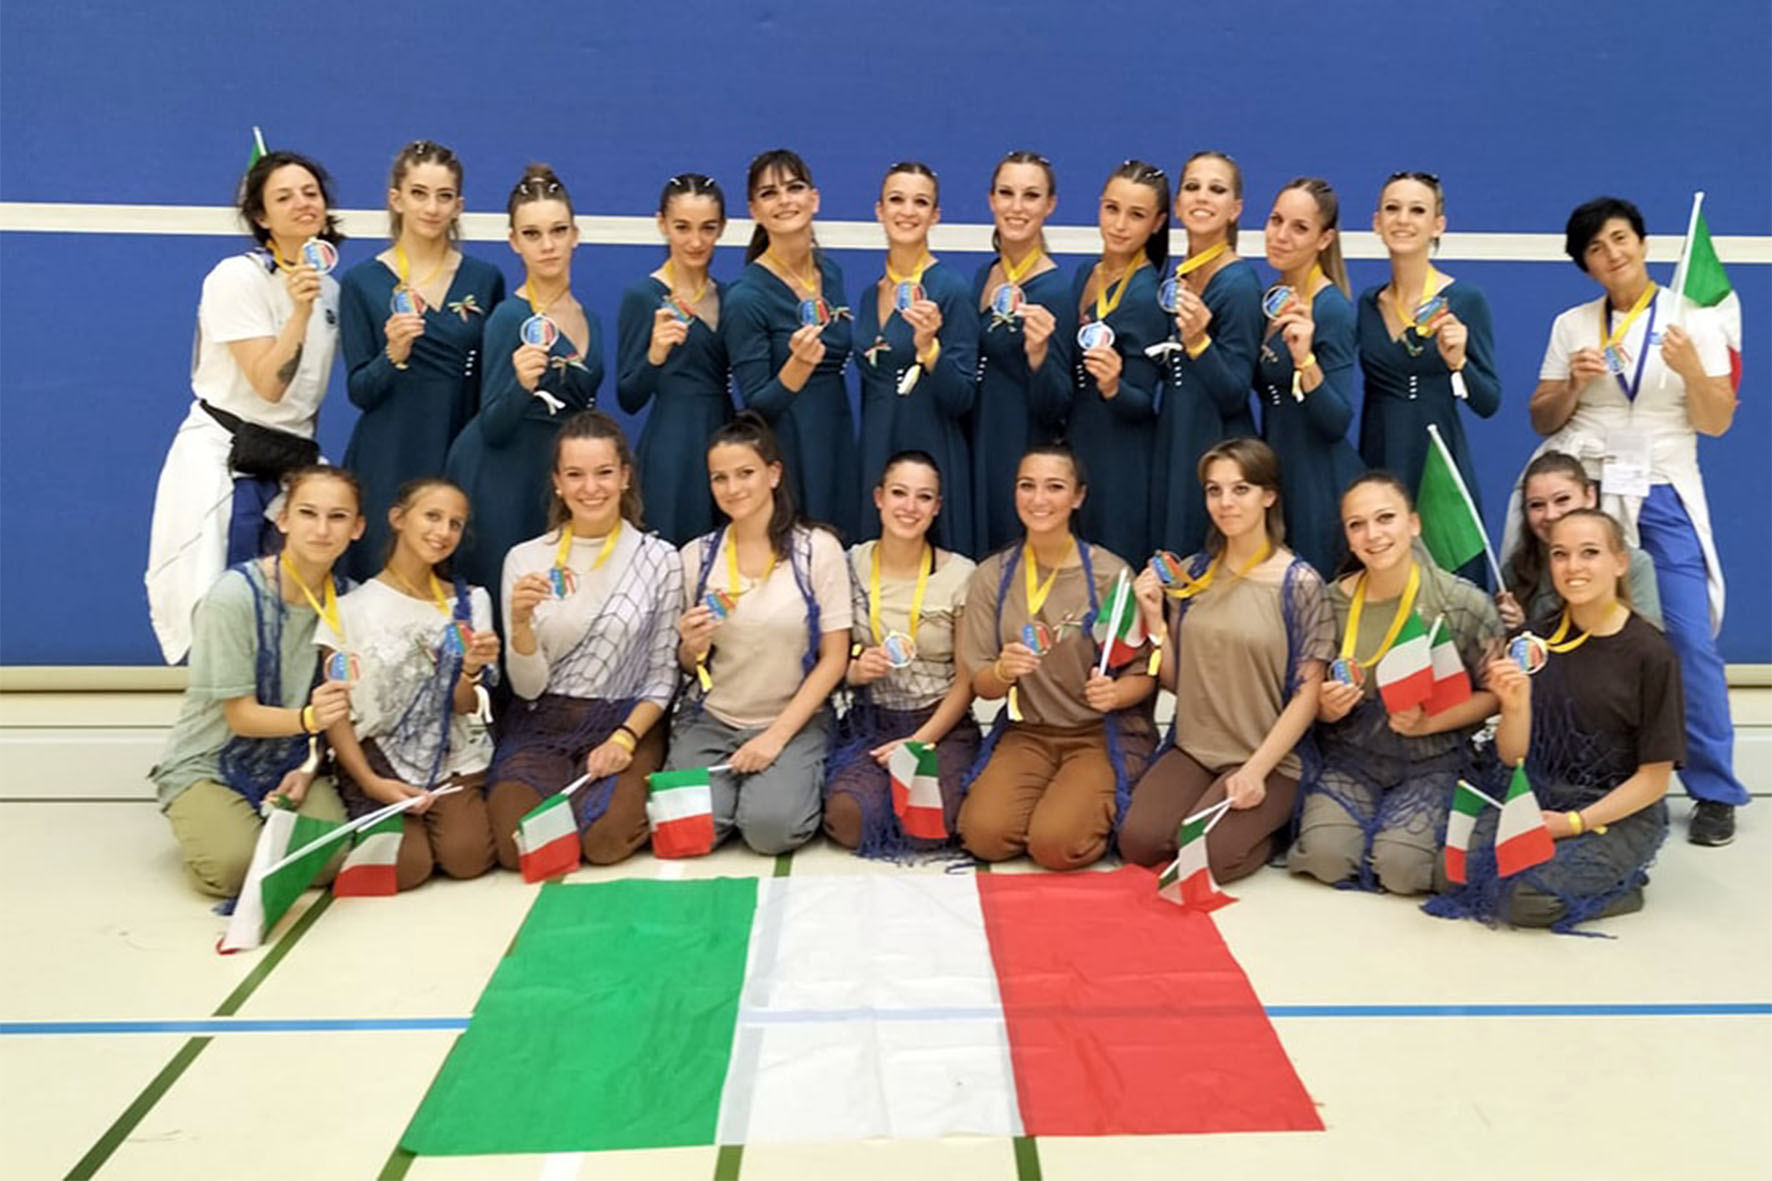 La Ginnastica Petrarca ha vinto l’oro all’European Gym For Life Challenge